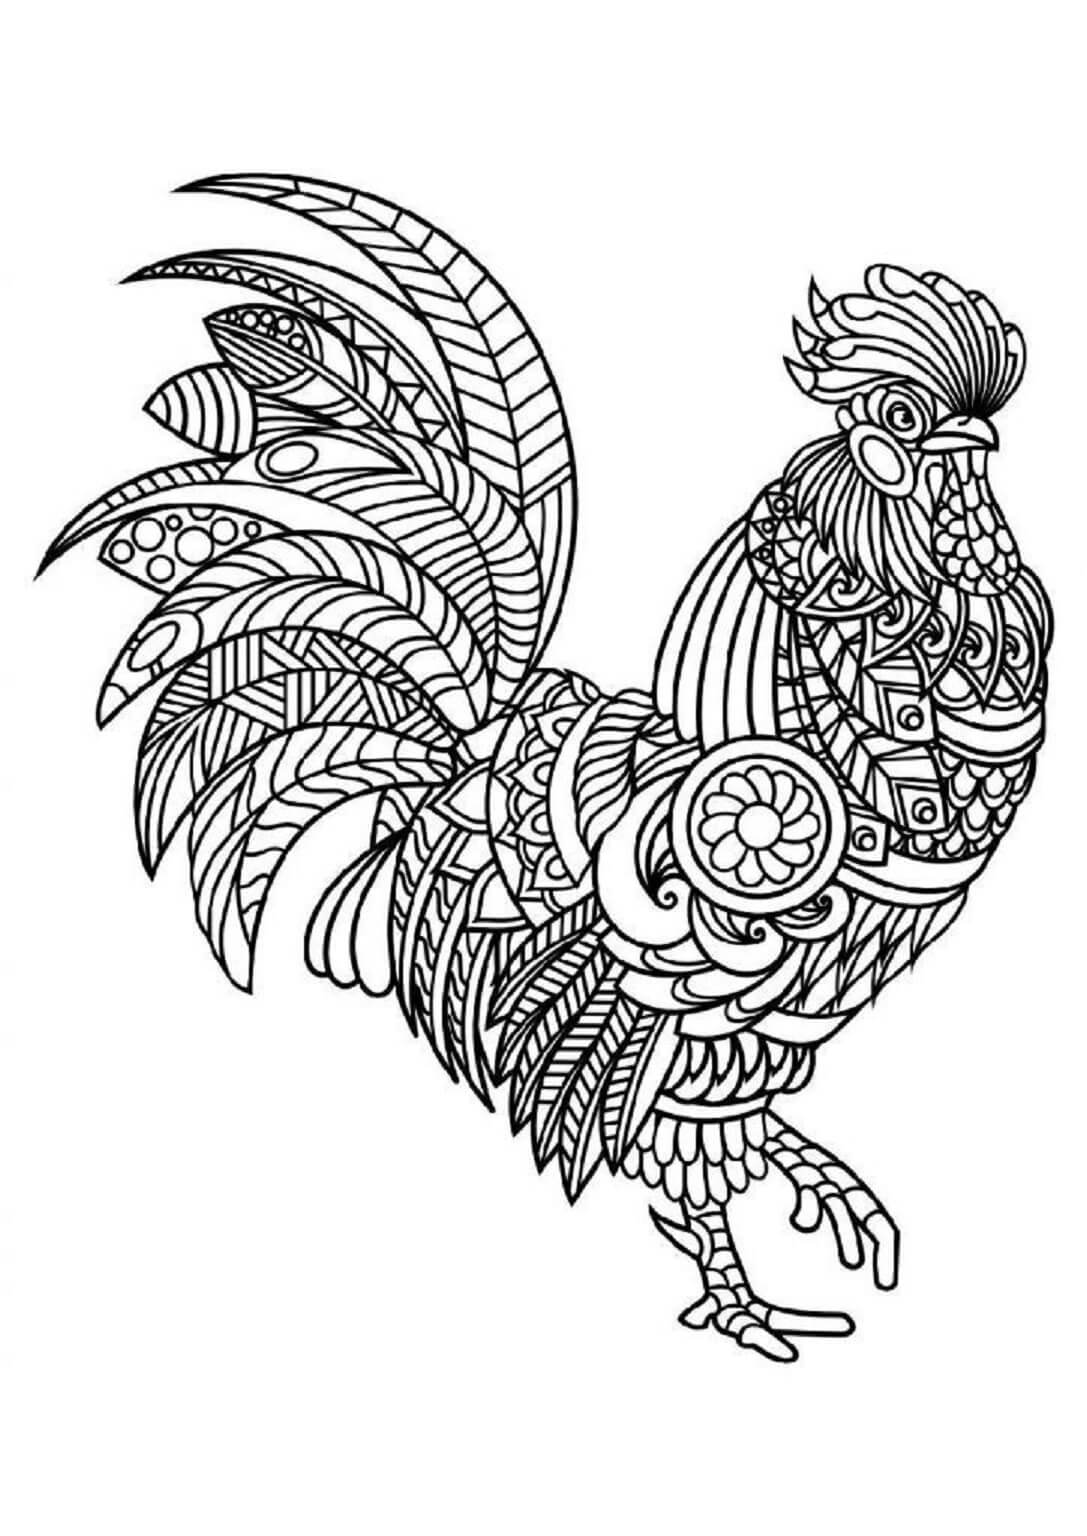 Mandala Chicken Coloring Page - Sheet 4 Mandalas